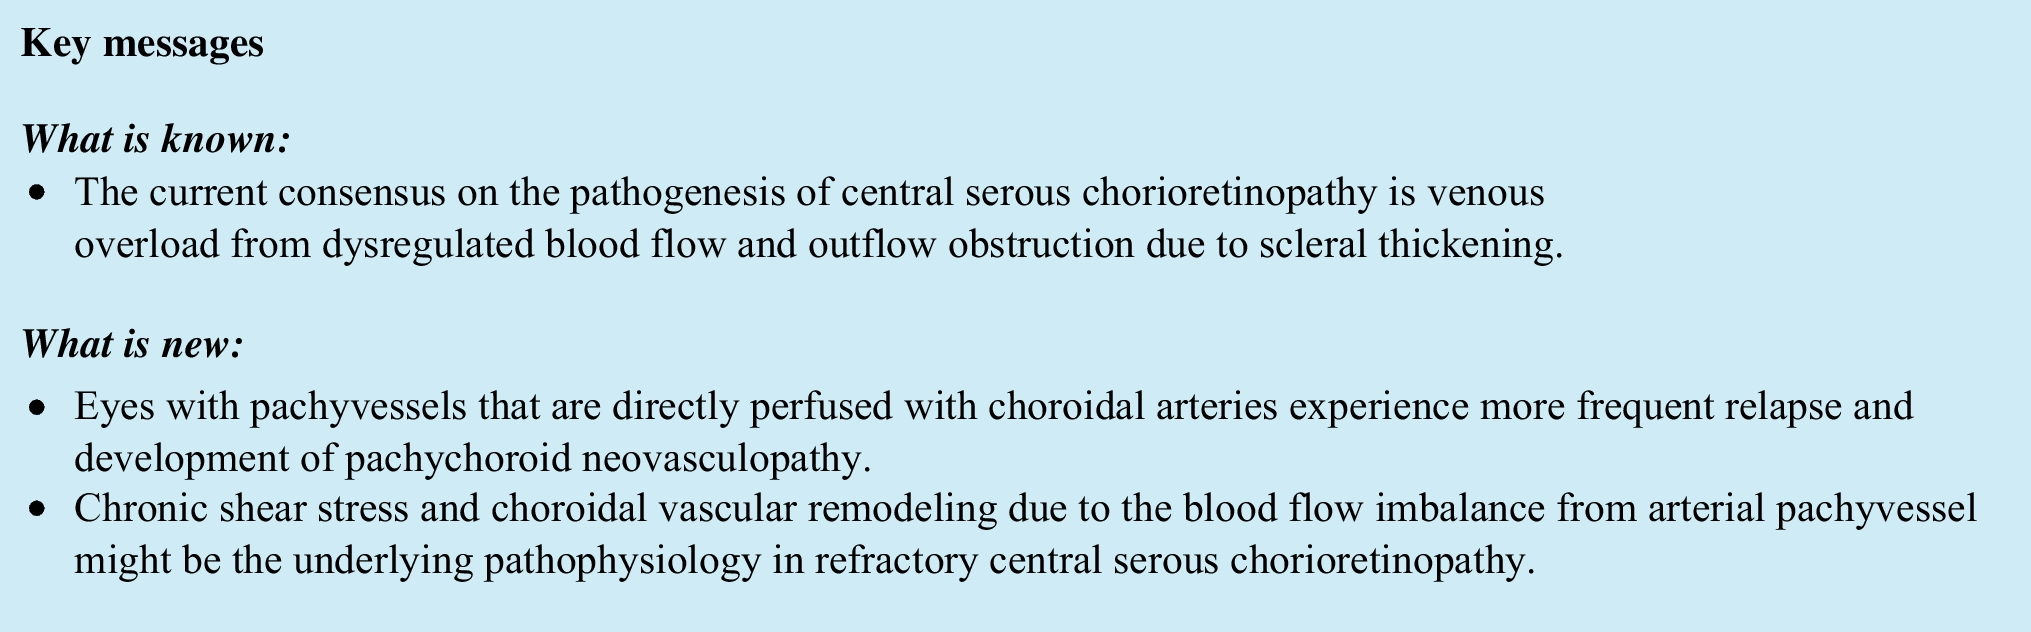 Choroidal arterial abnormality in central serous chorioretinopathy